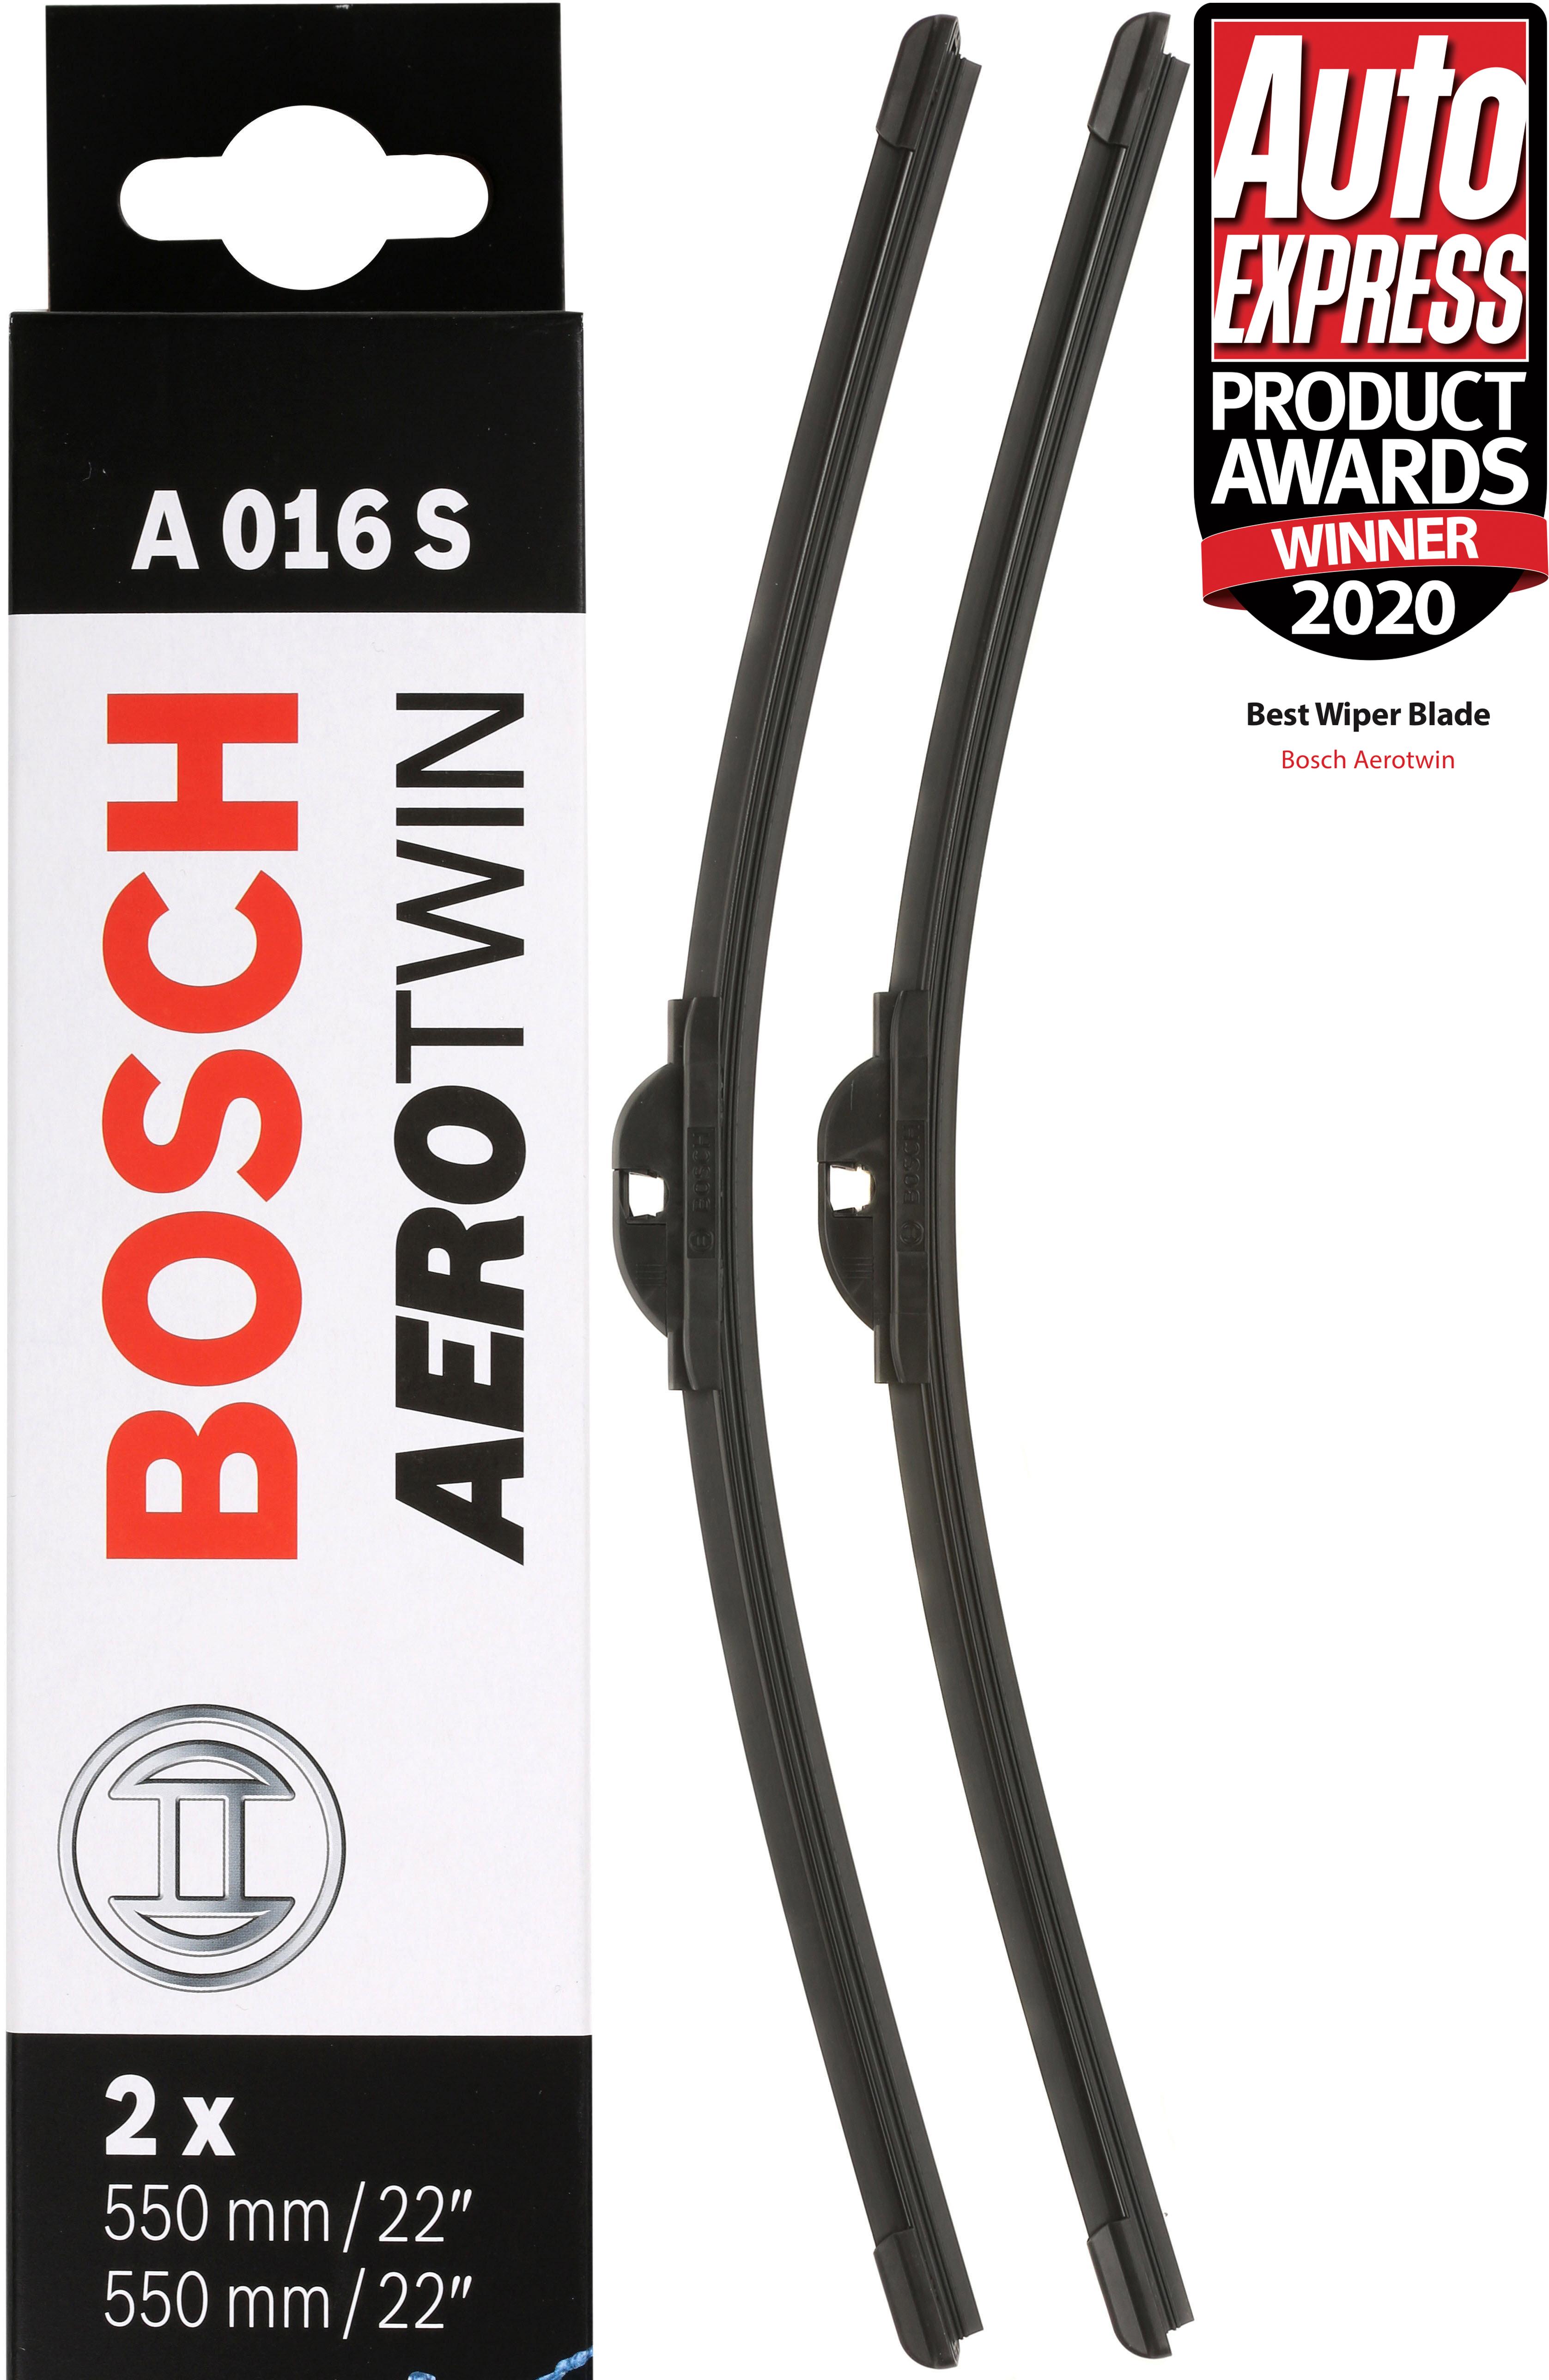 Bosch A016S Wiper Blades - Front Pair